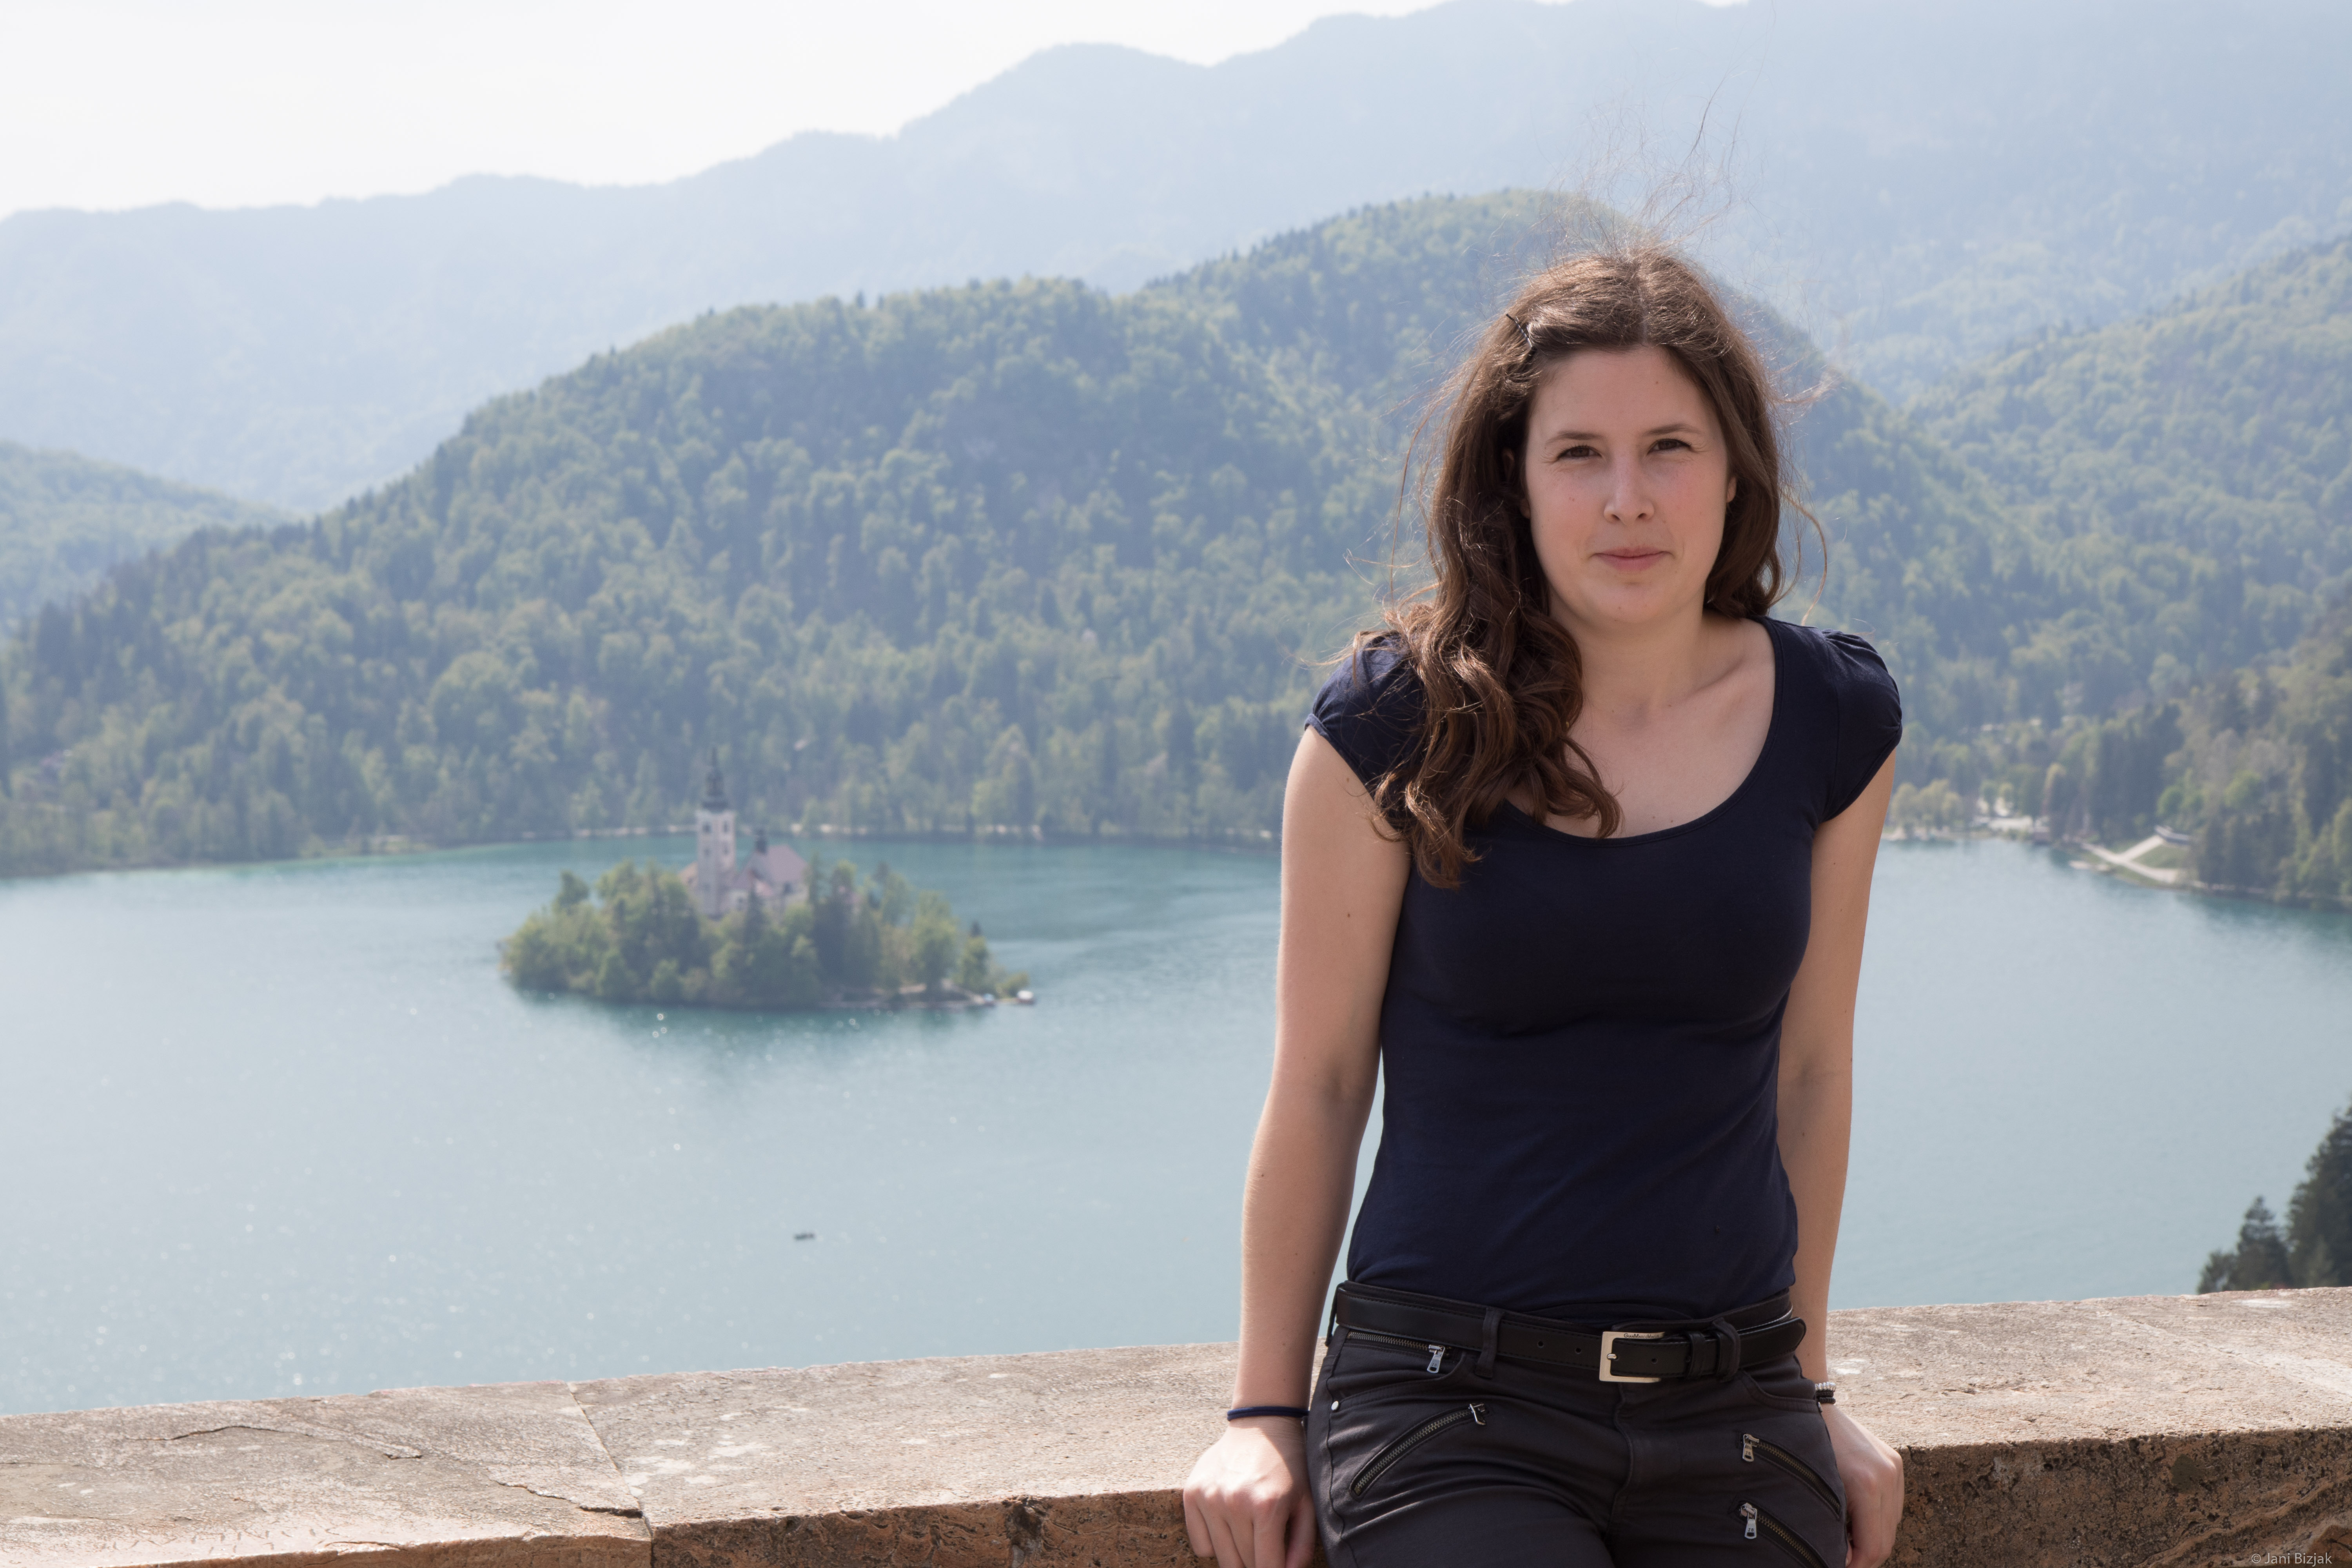 Veronika at Bled castle